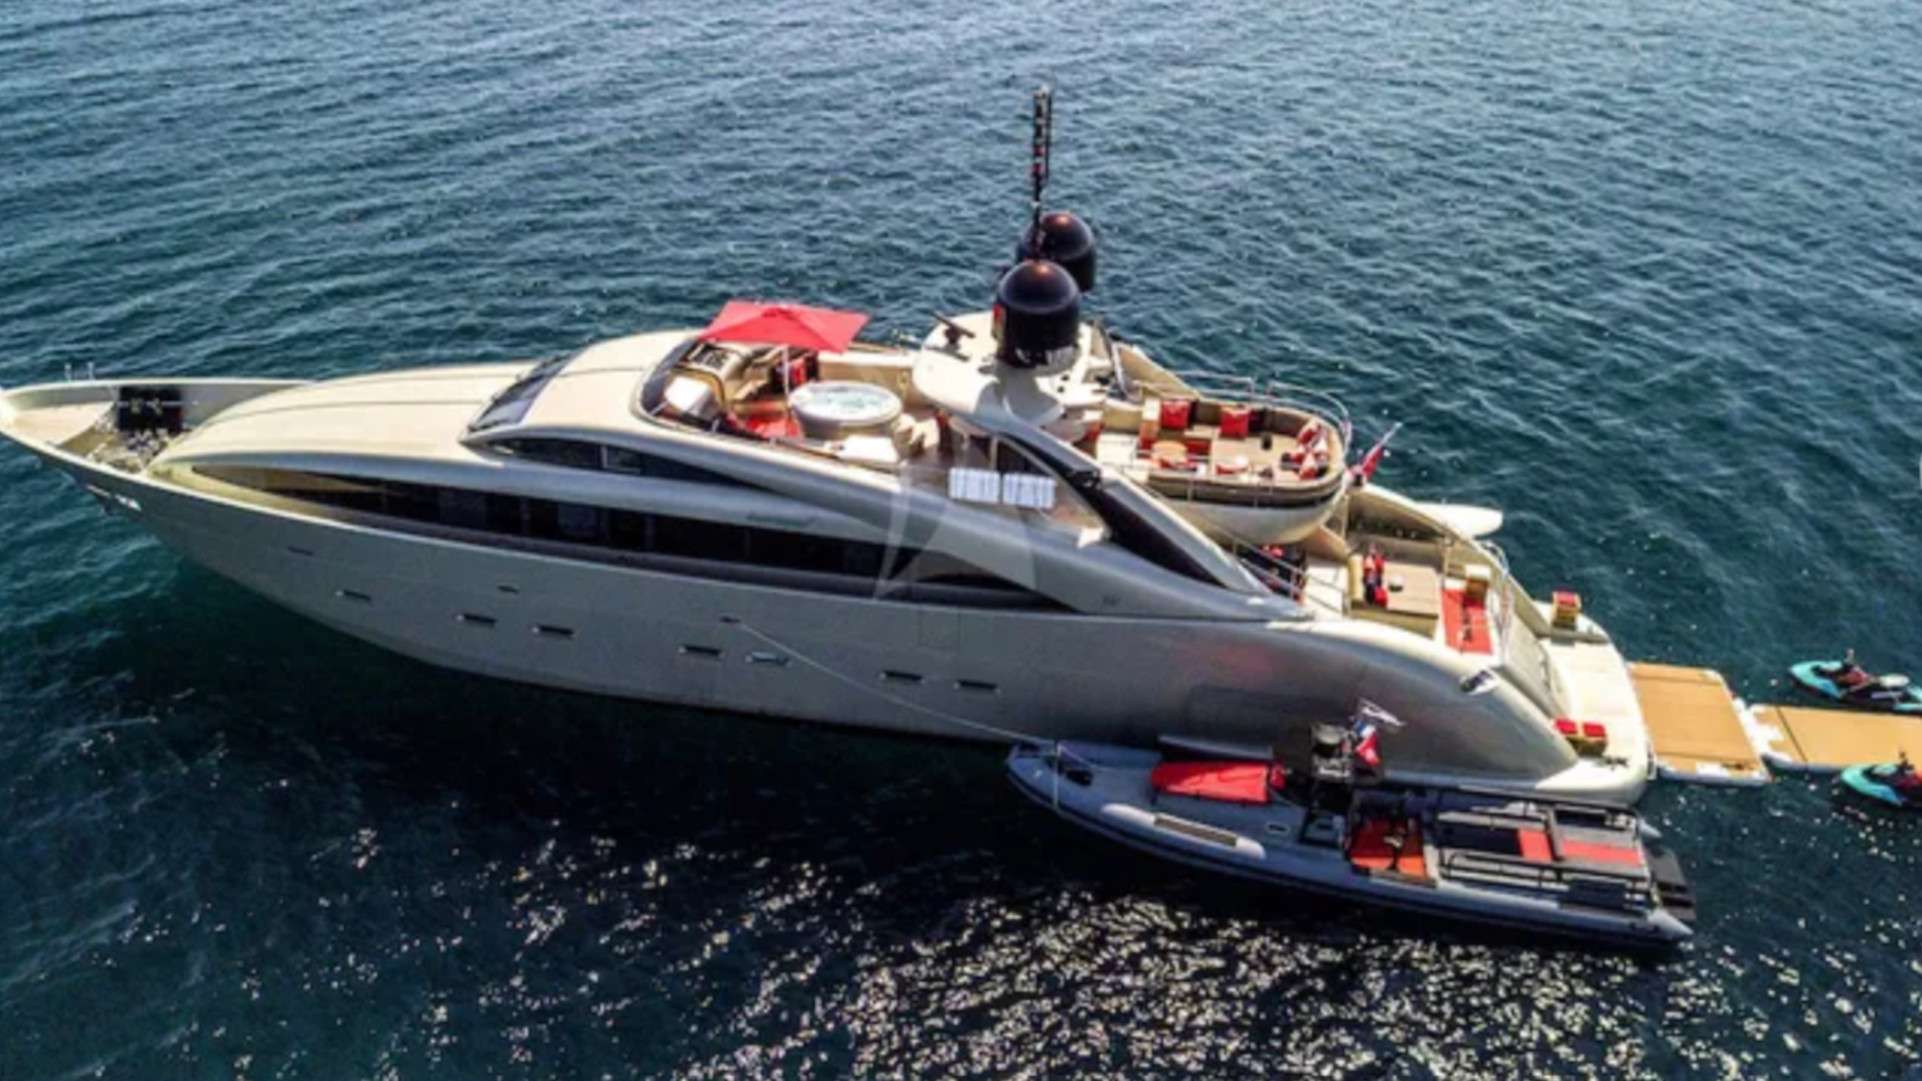 YCM 120 - Superyacht charter British Virgin Island & Boat hire in Riviera, Corsica, Sardinia, Spain, Balearics, Caribbean 1